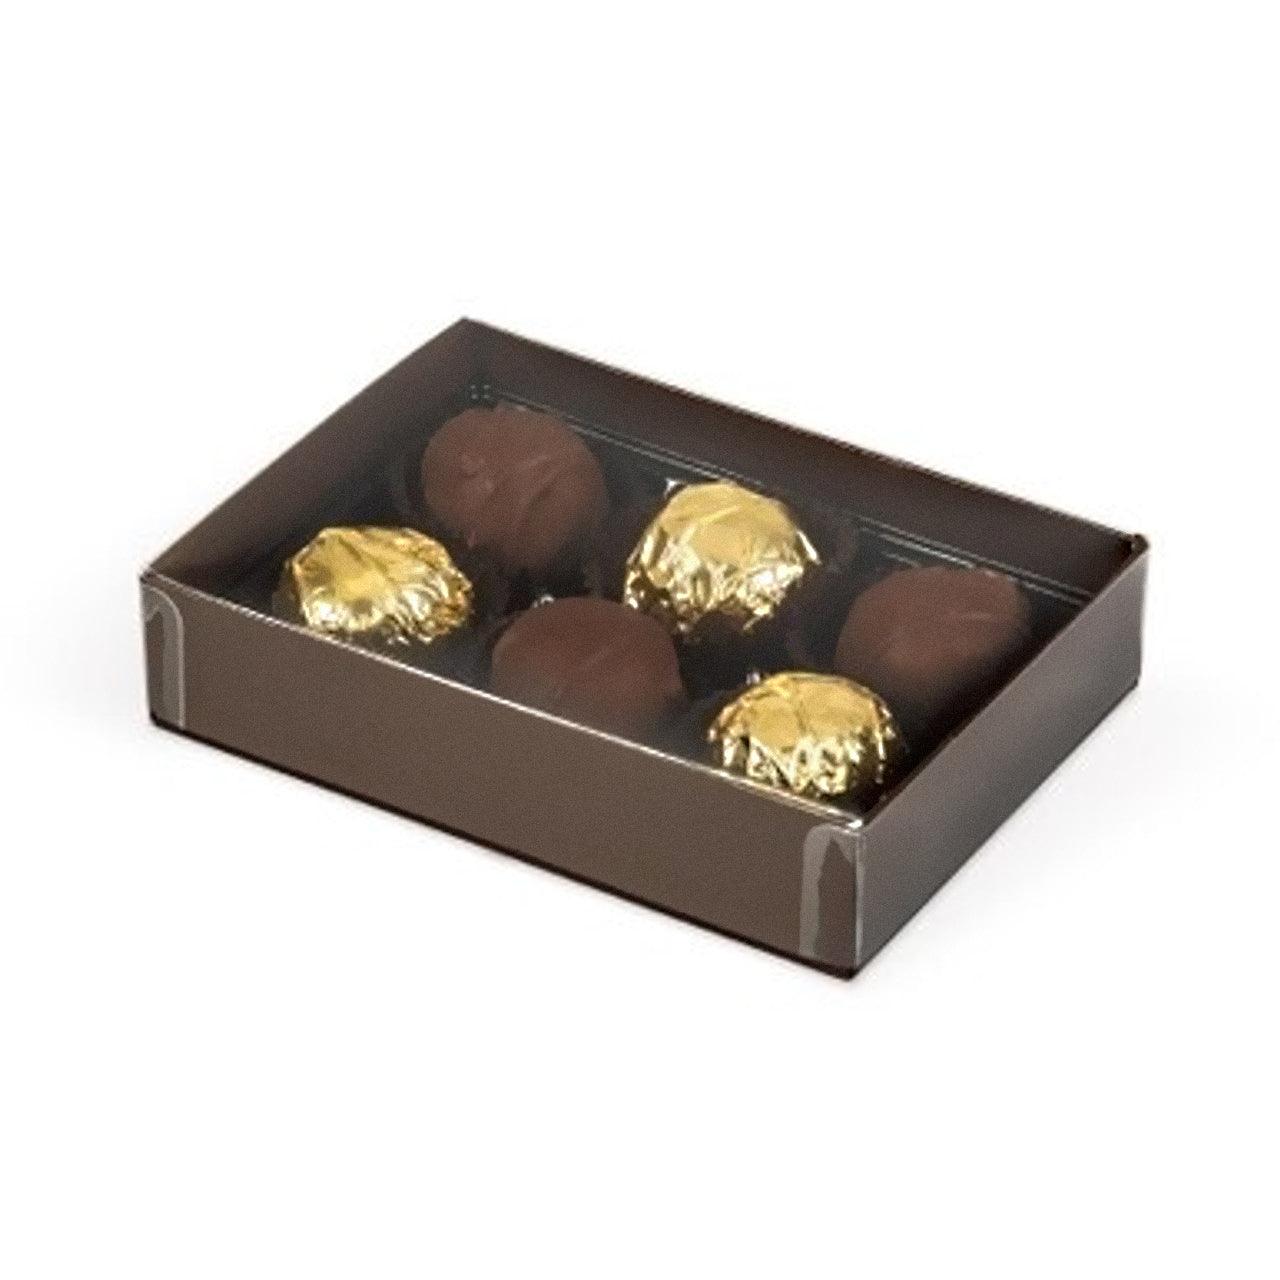 Small Single Layer Brown Box for 6 Candies - ViaCheff.com